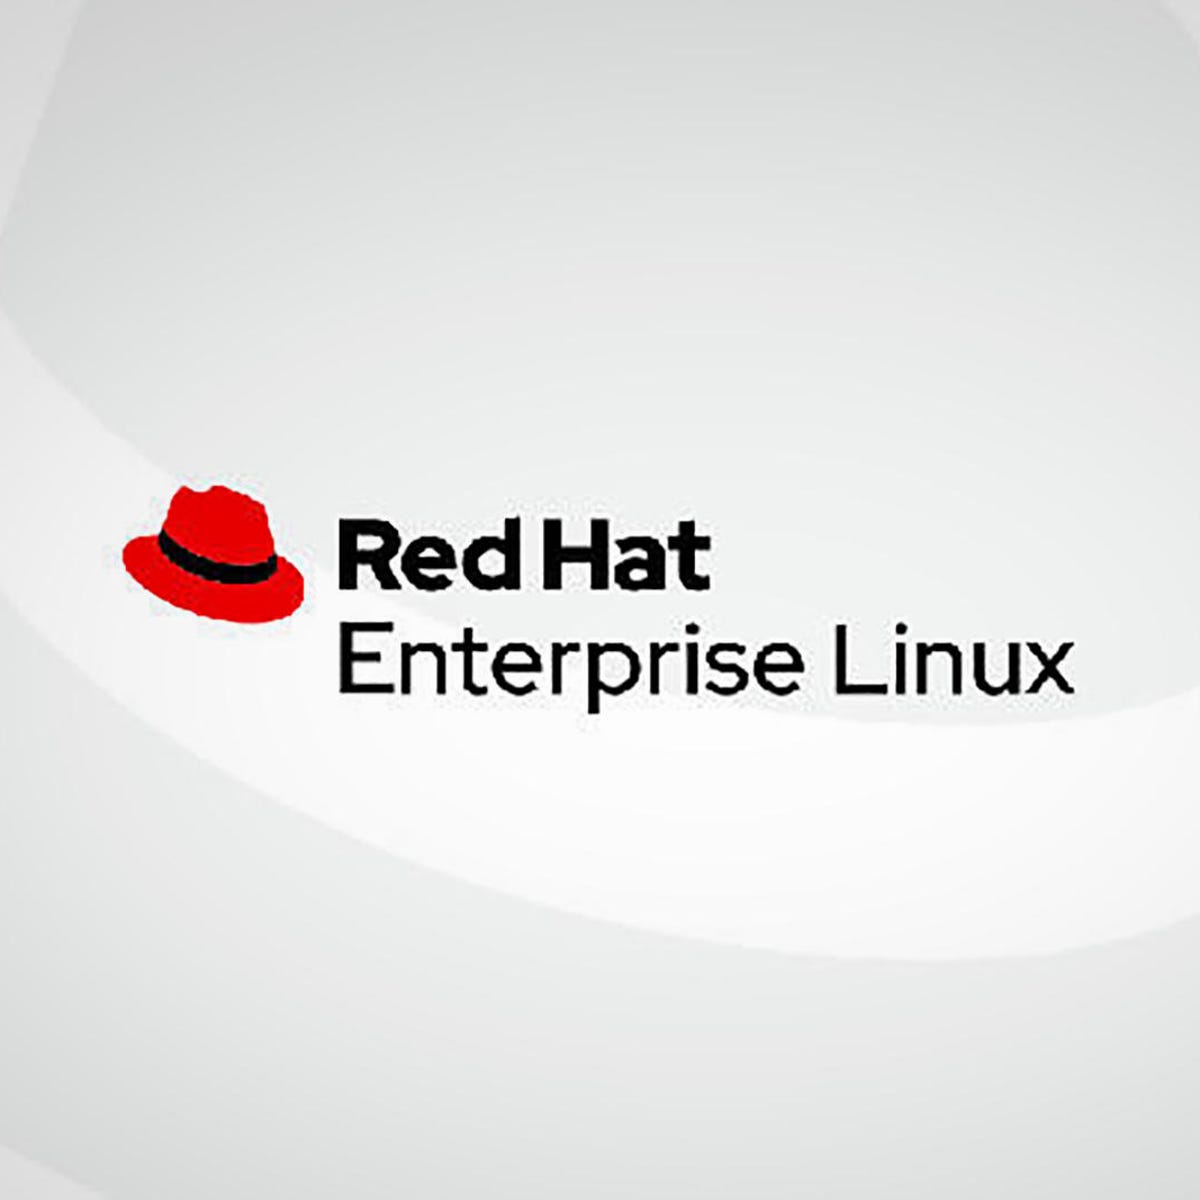 Red hat 7. Red hat Enterprise Linux 8. Red hat Enterprise Linux. Red hat Enterprise Linux логотип. Red hat Enterprise Linux 7.